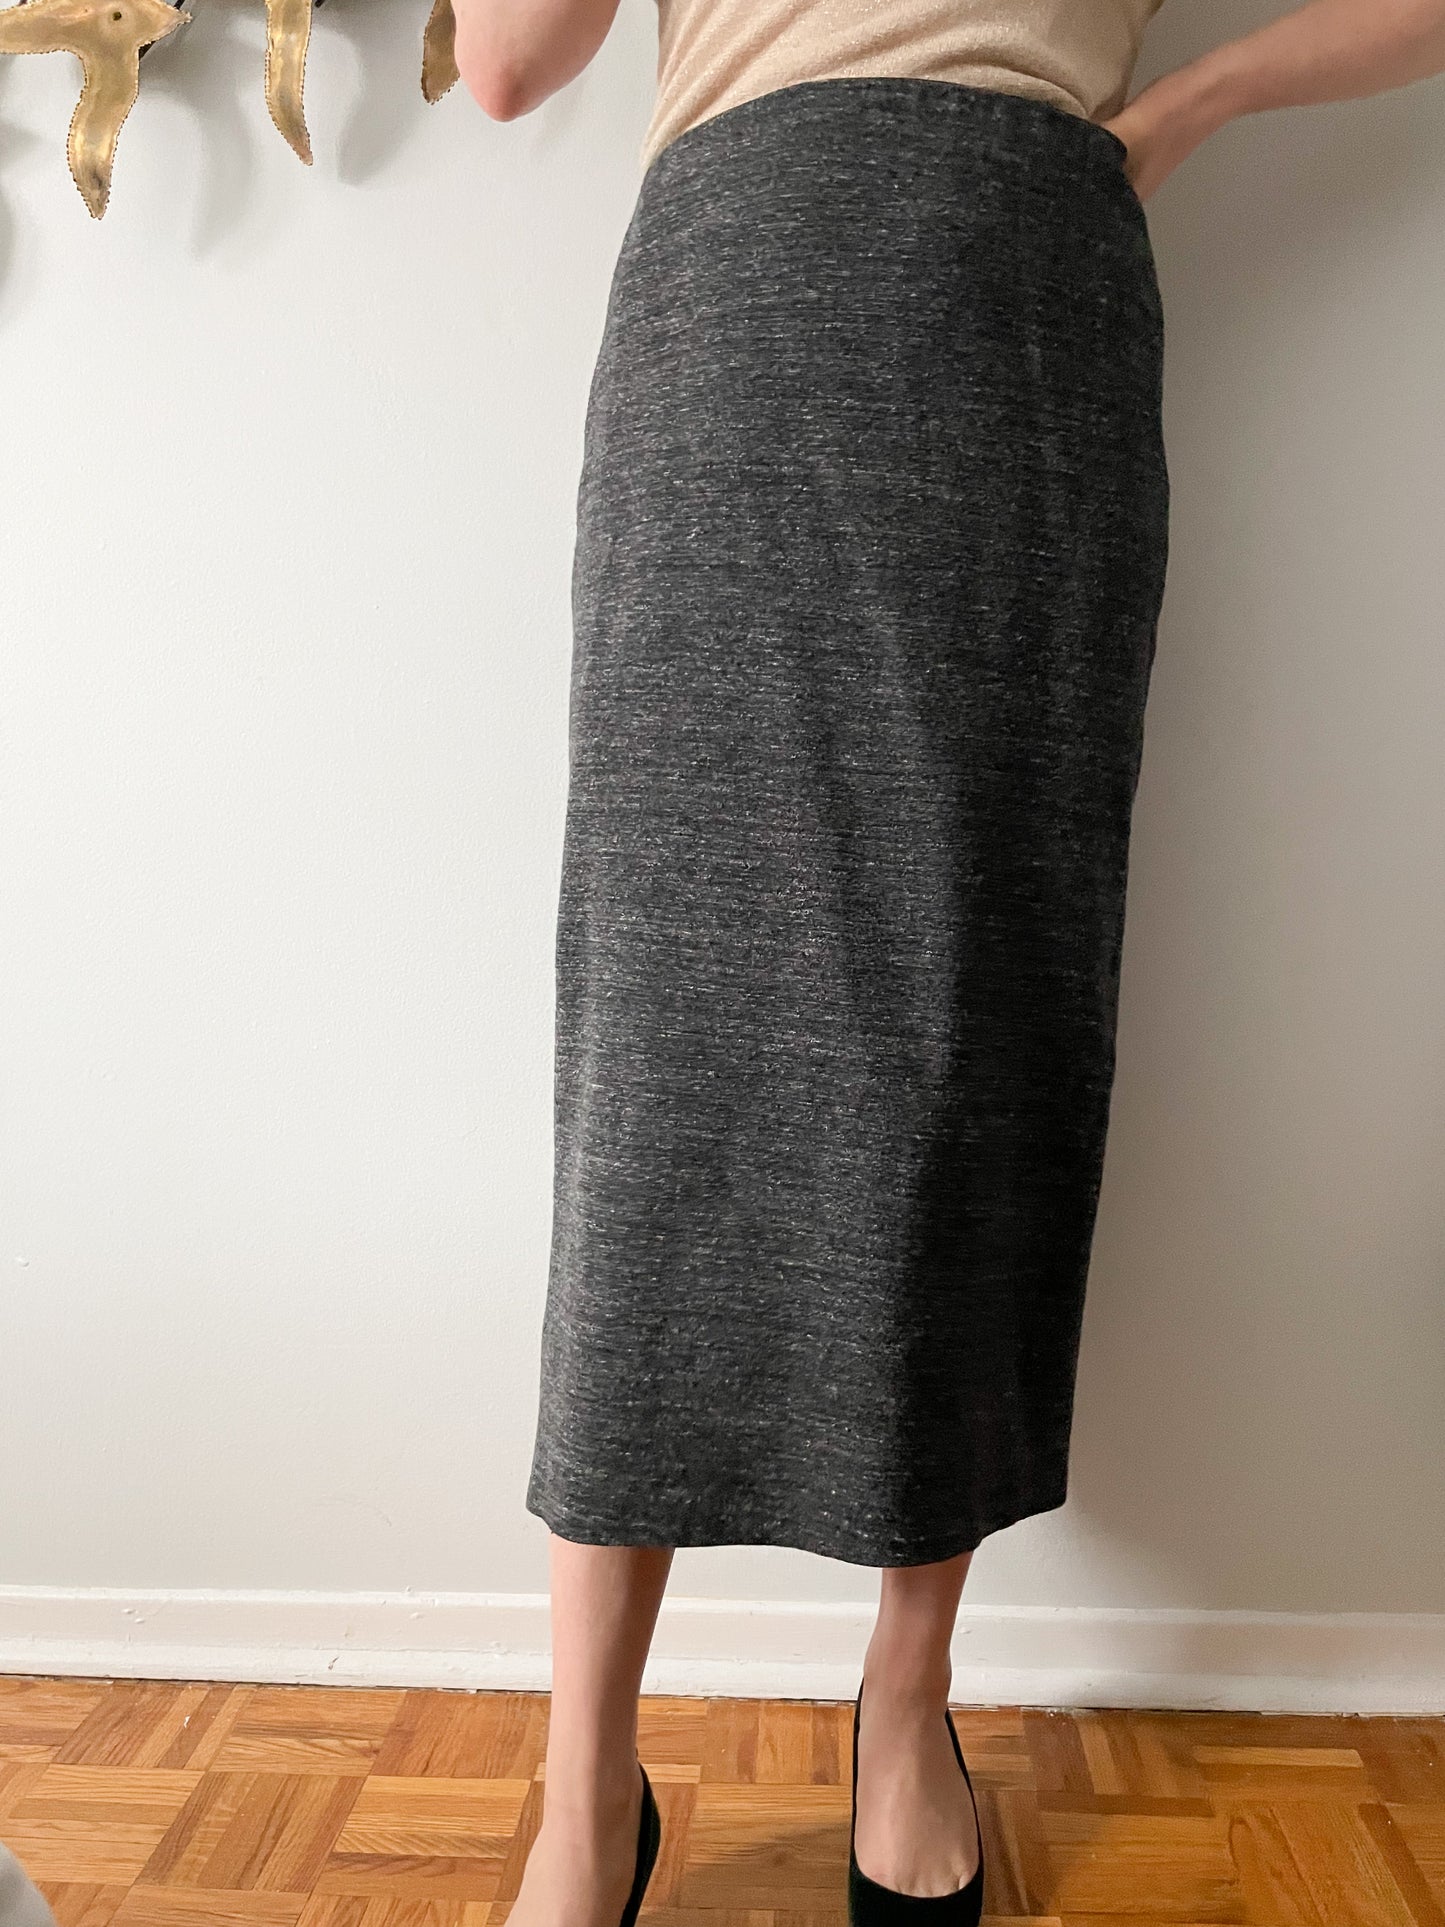 Zara Grey Stretch Knit Pencil Midi Skirt - Medium